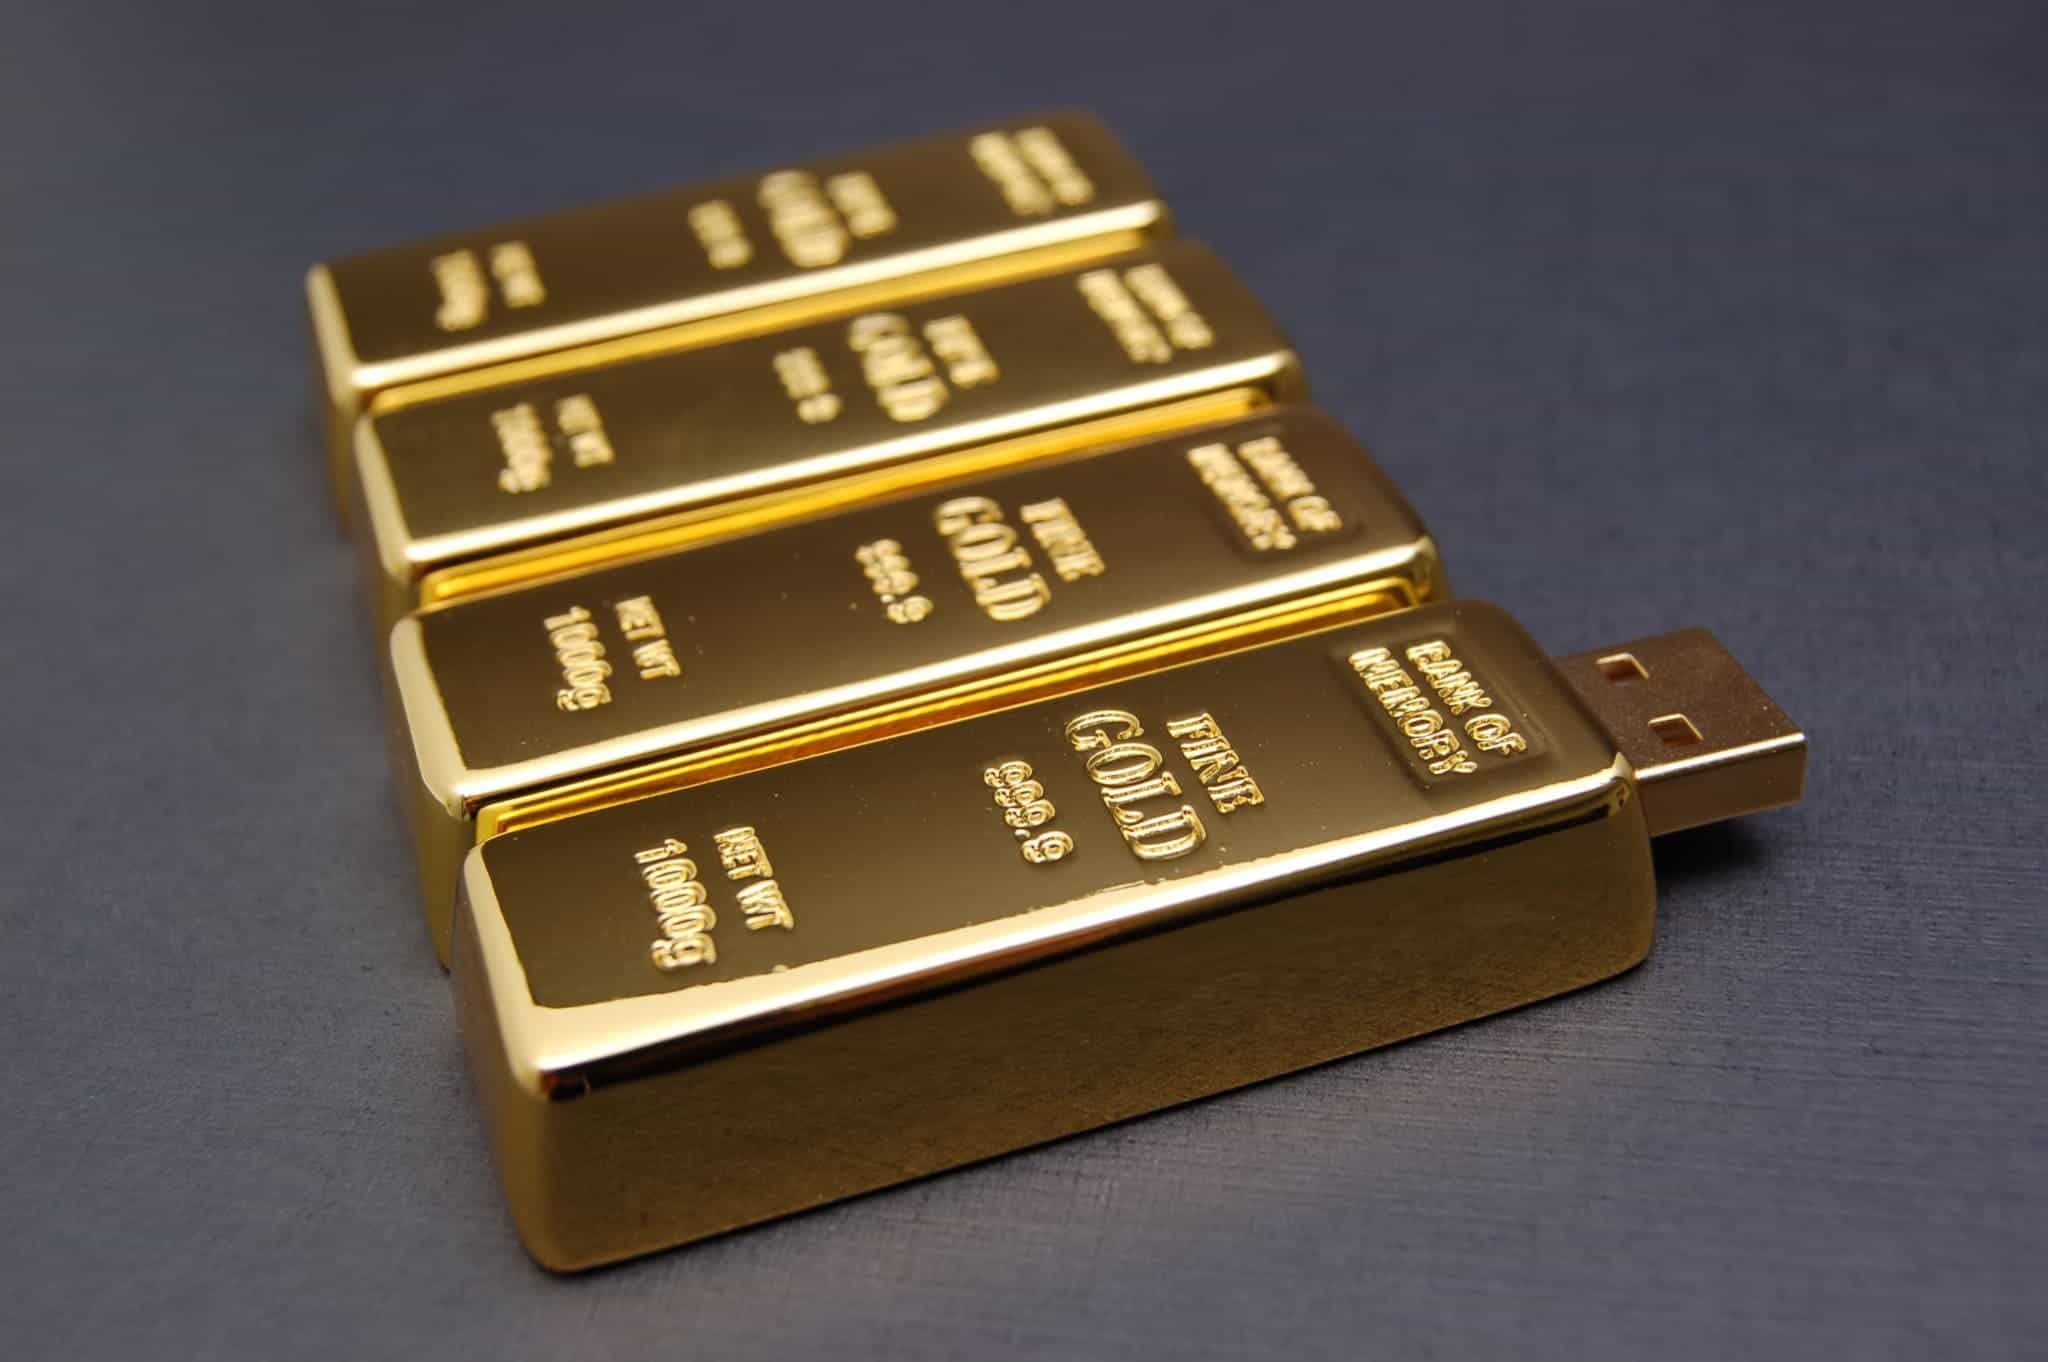 I'd pick that up too.
Image via flirk user Gold Brick Custom USB Drives.